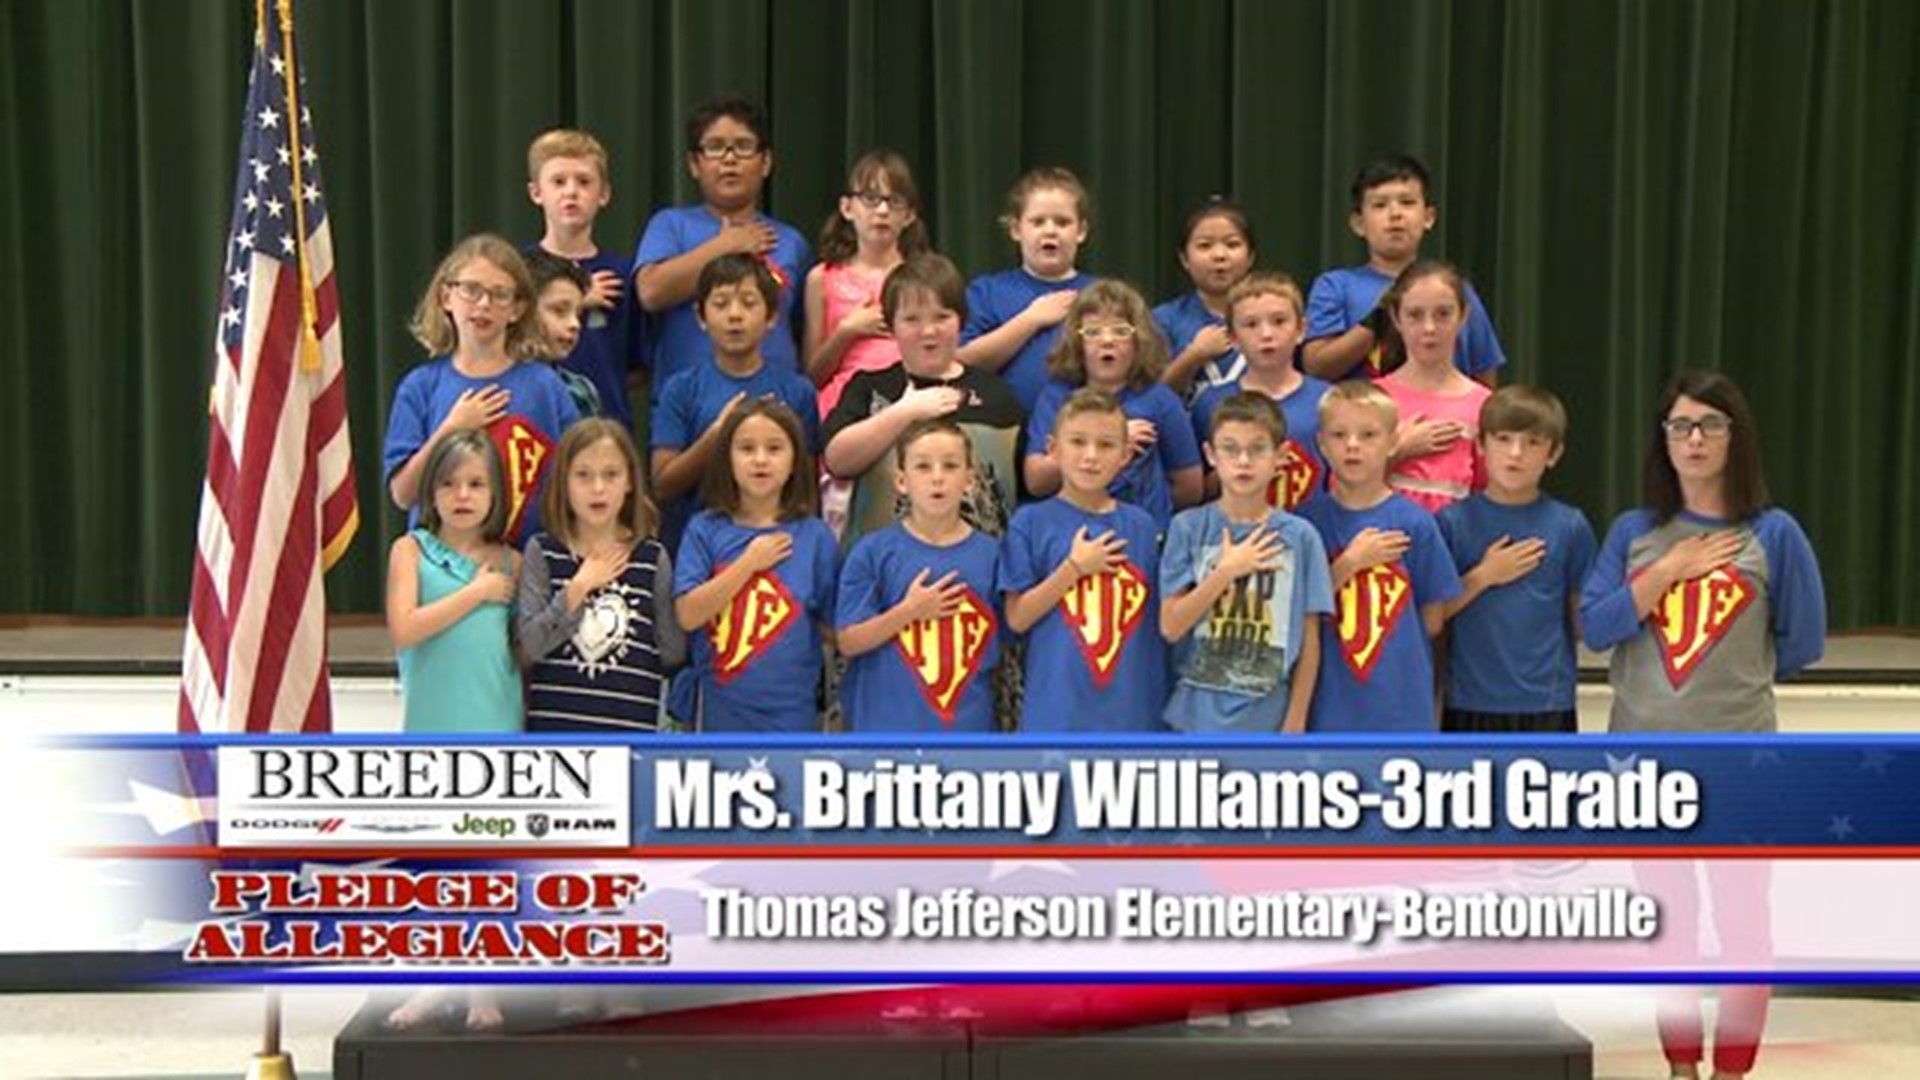 Thomas Jefferson Elementary - Bentonville - Mrs. Brittany Williams - 3rd Grade